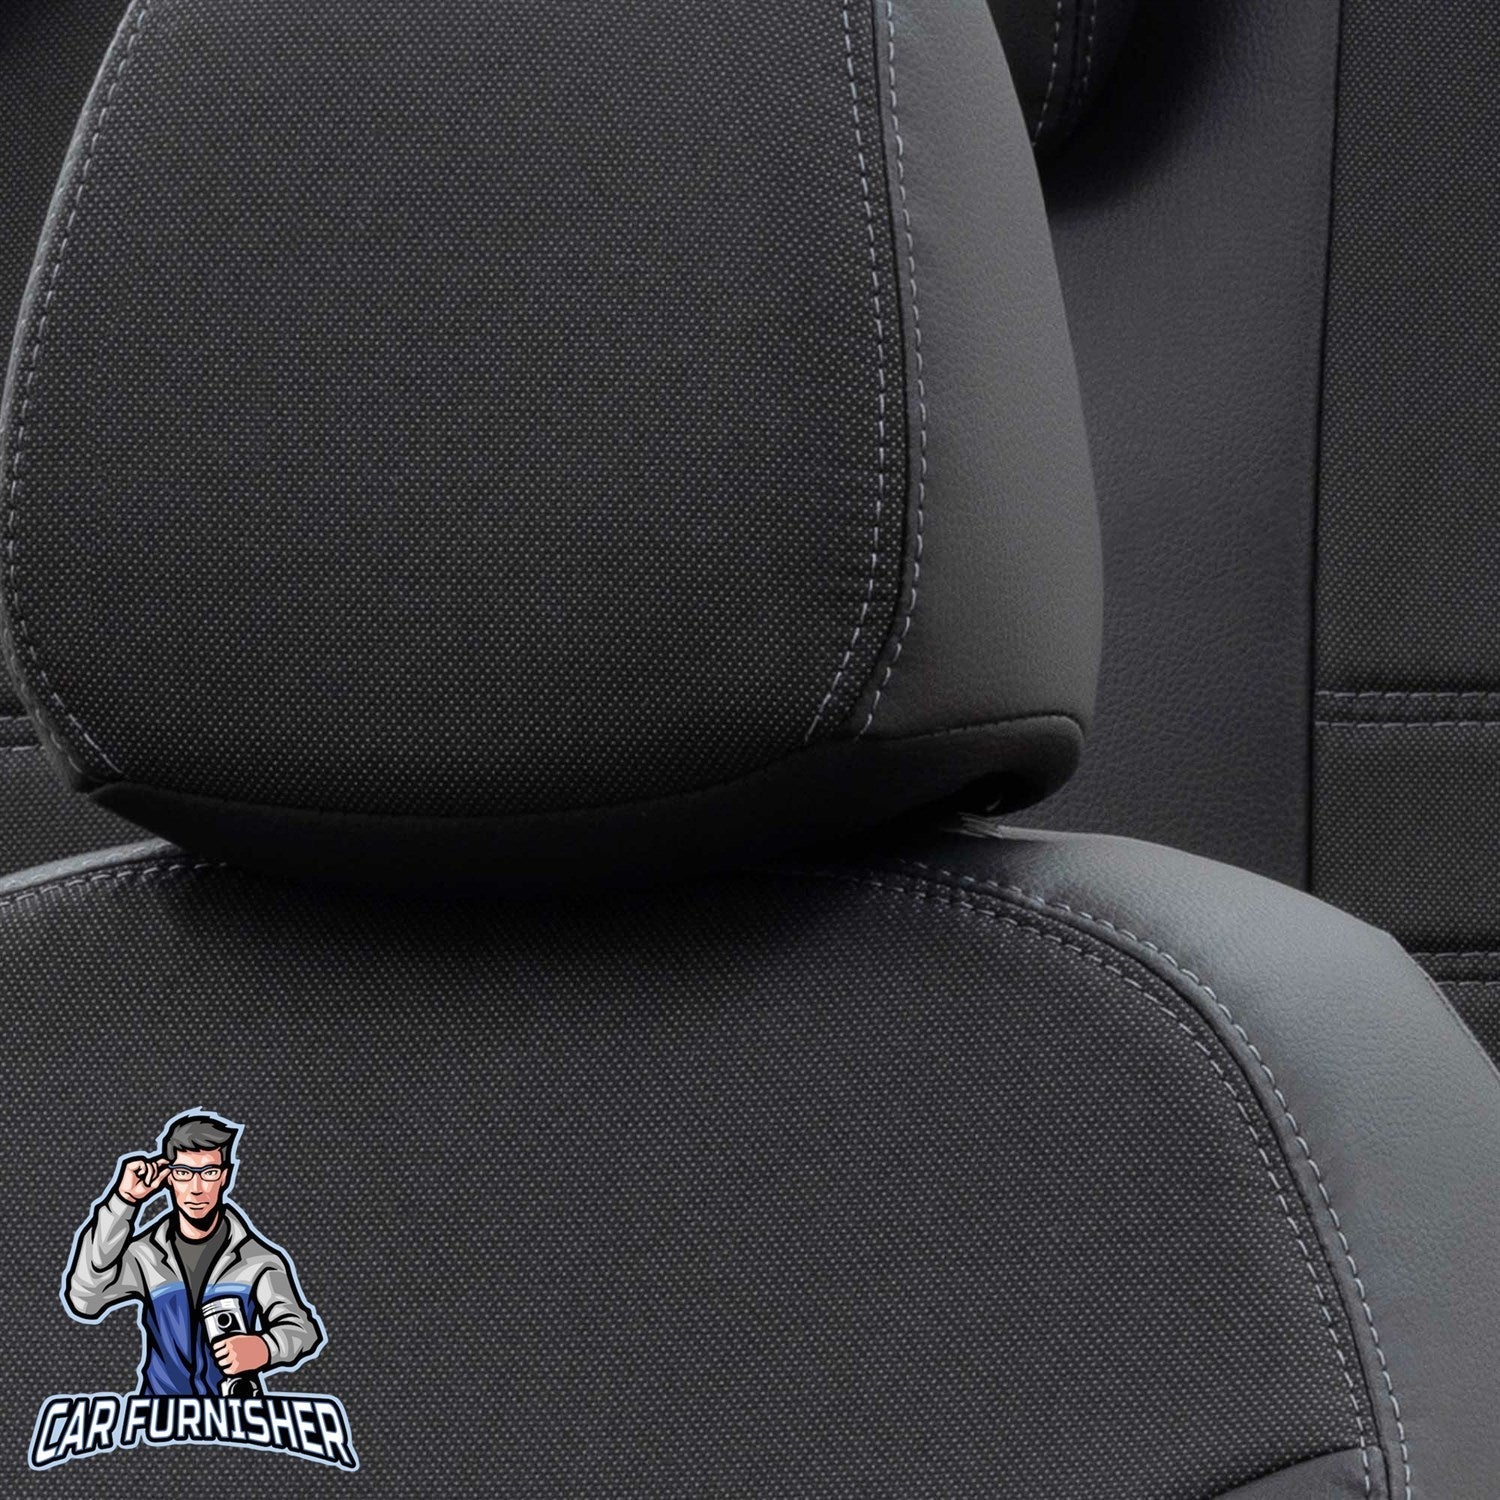 Hyundai Tucson Seat Covers Paris Leather & Jacquard Design Black Leather & Jacquard Fabric